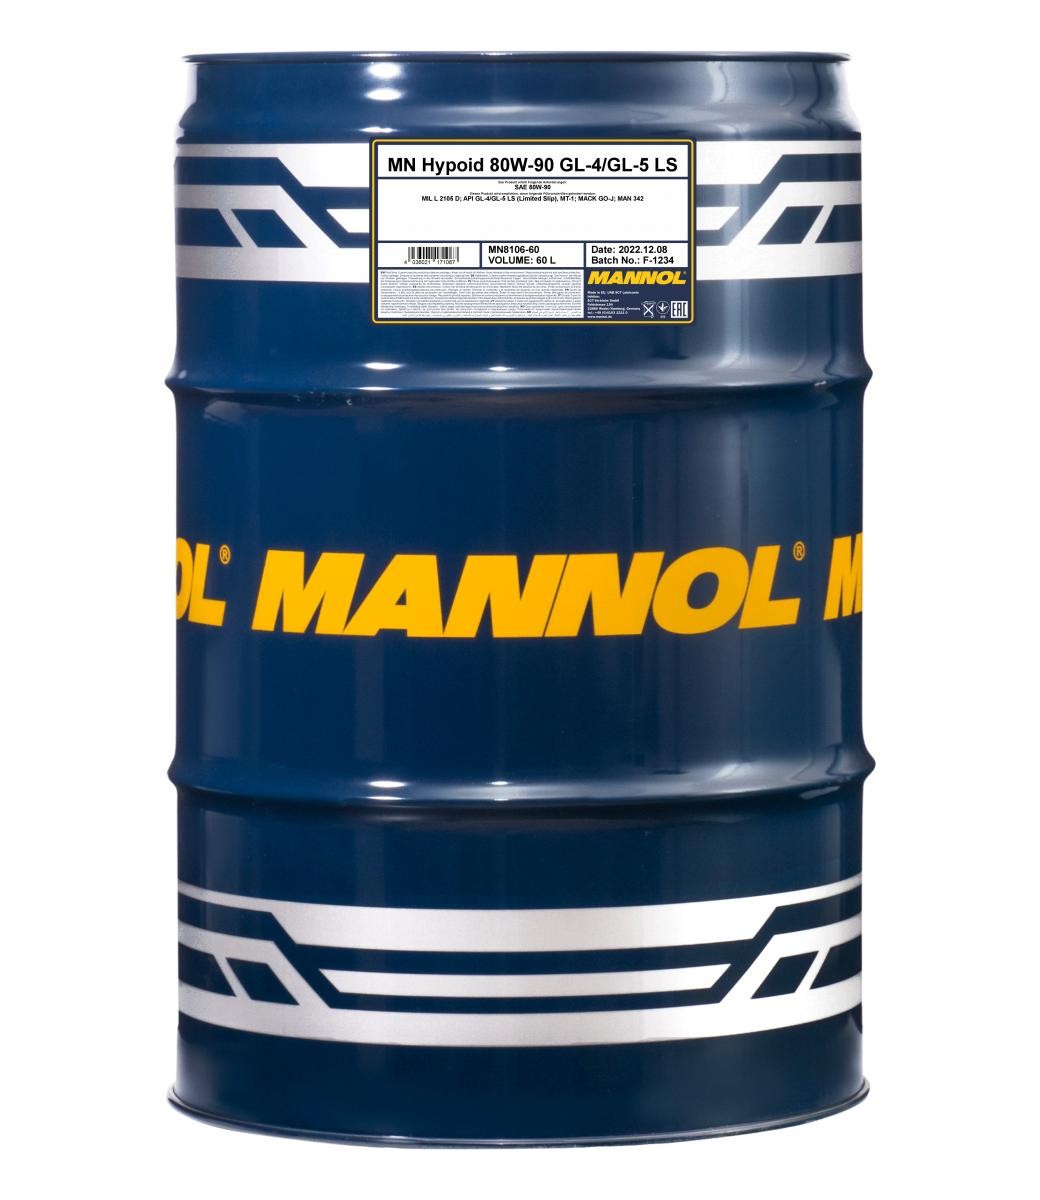 MANNOL Hypoid GL-5 80W-90, Mineralöl, Inhalt: 60l MIL-L 2105 D, MAN 342, MACK GO-J Getriebeöl MN8106-60 kaufen